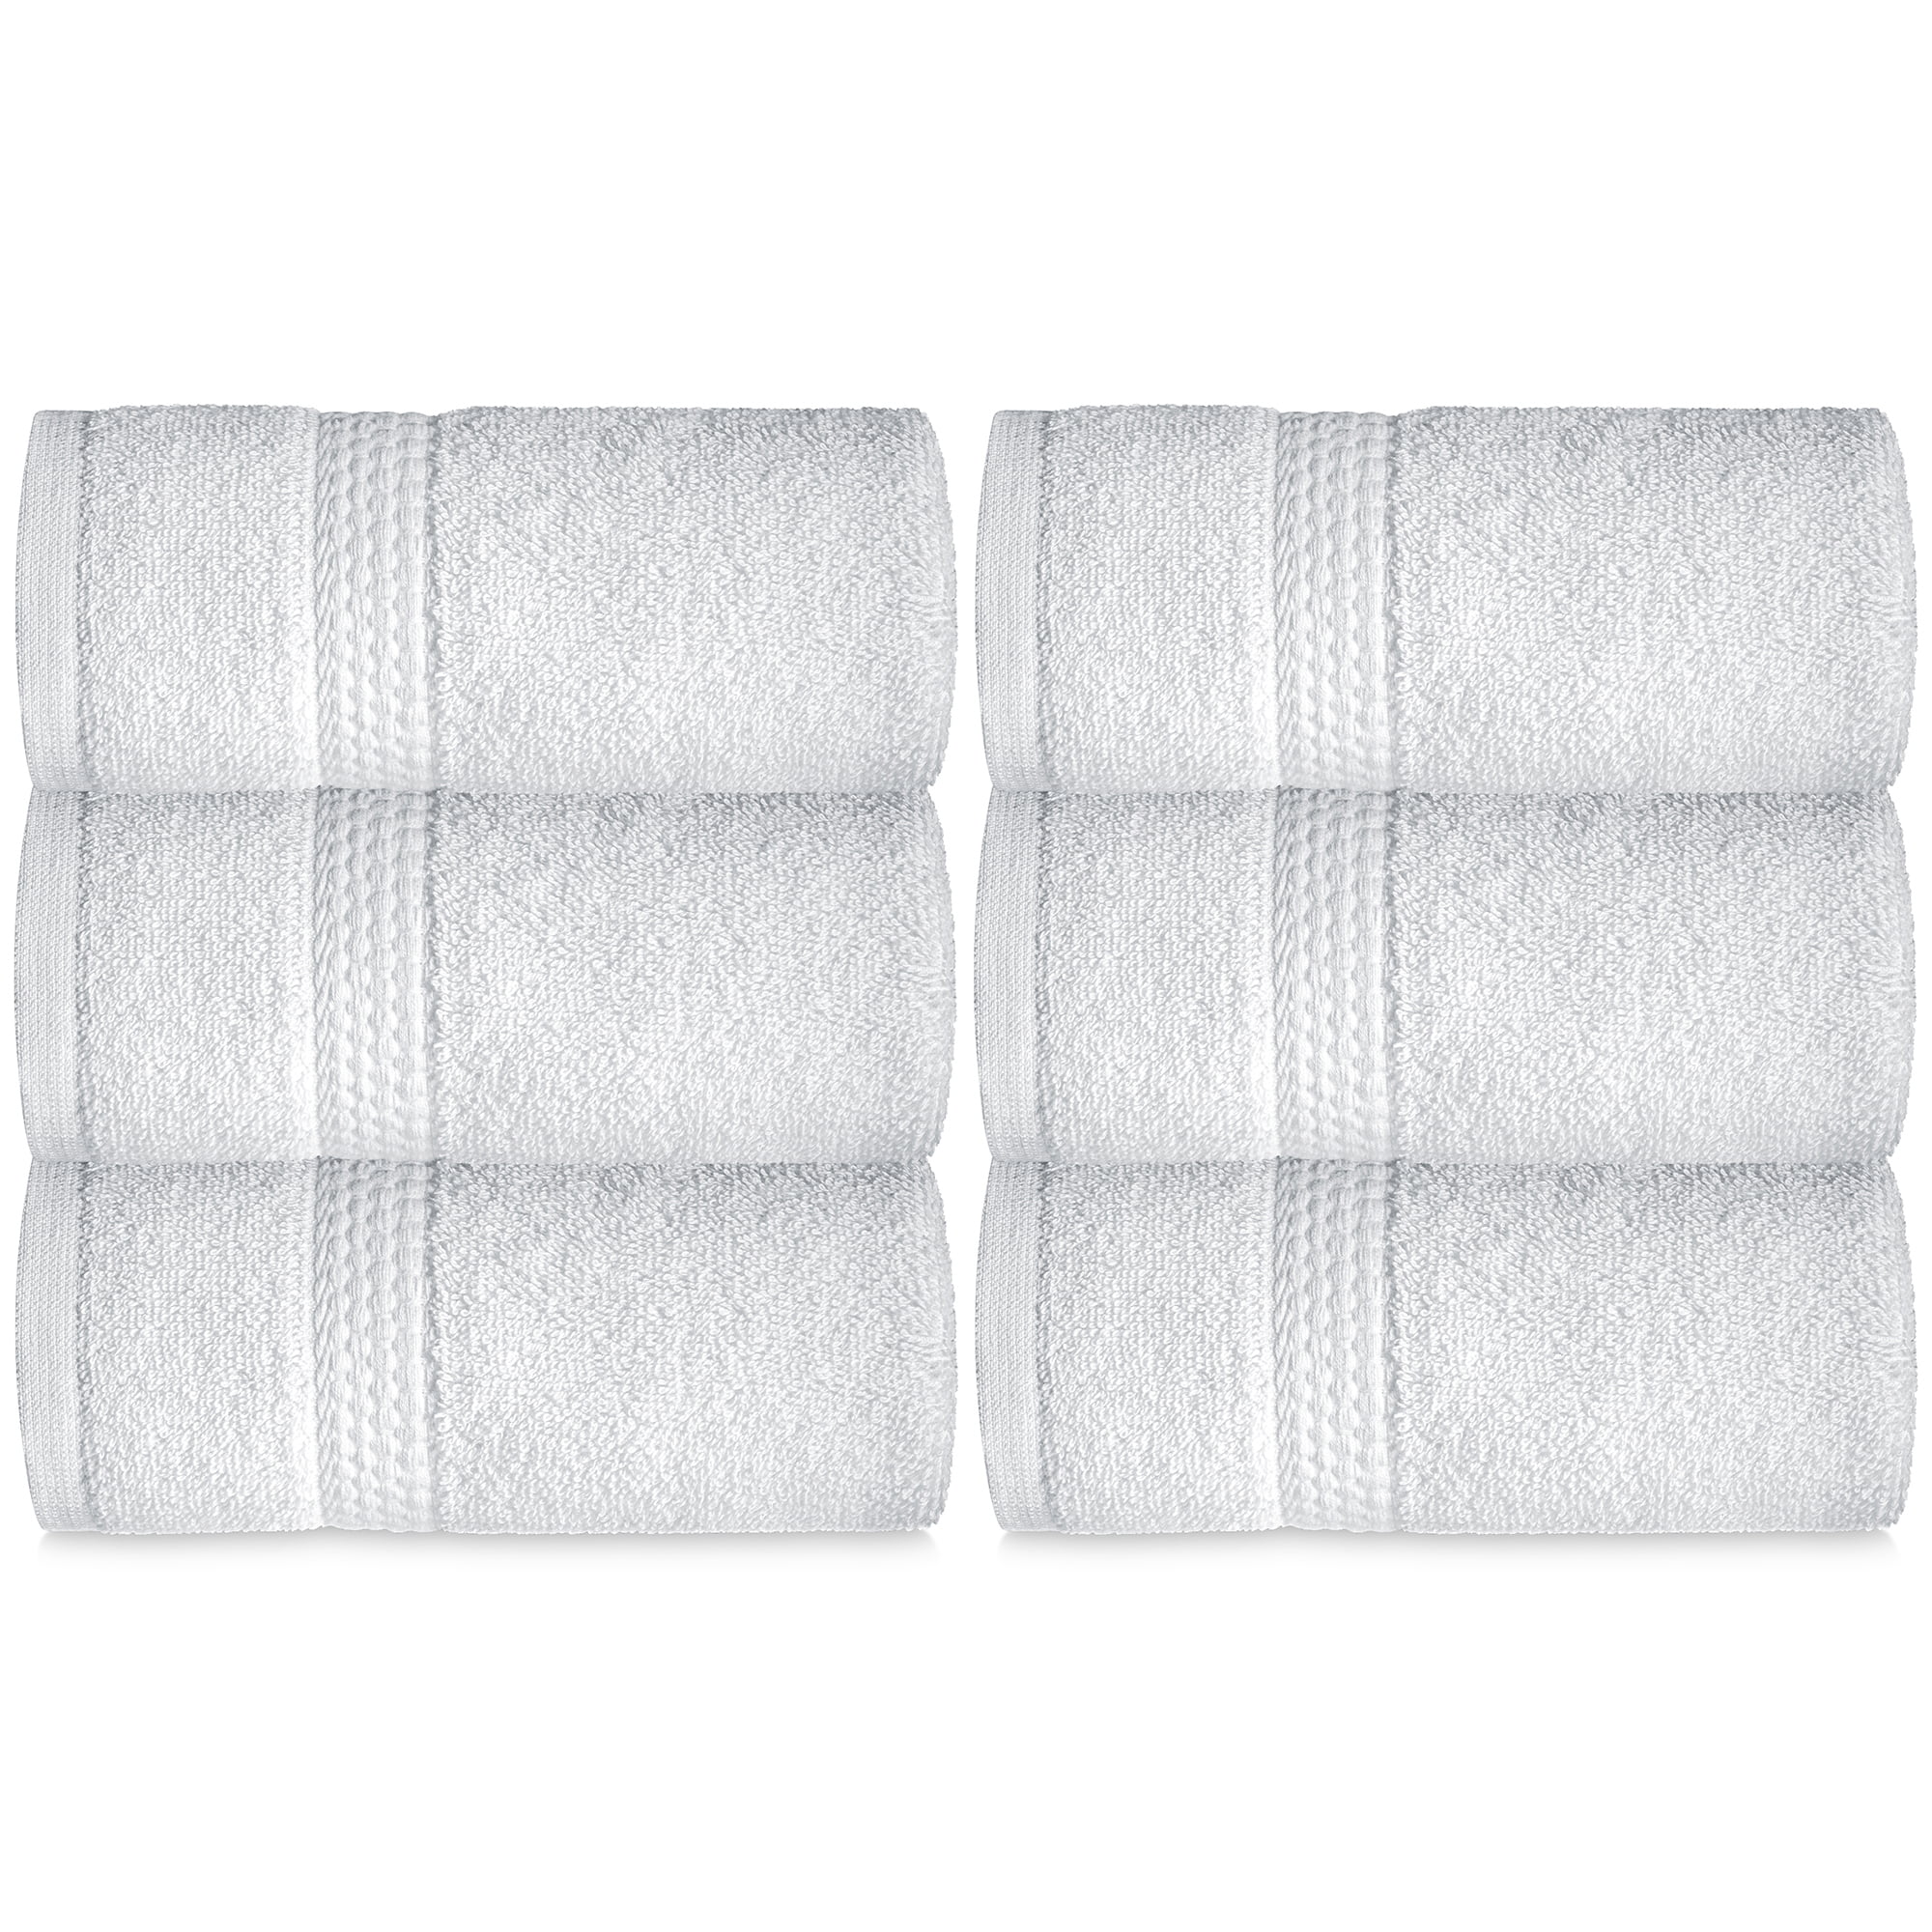 SweetNeedle Daily Use 100% Cotton Face Hand Bath 6 Pieces Bathroom Towel Set New 